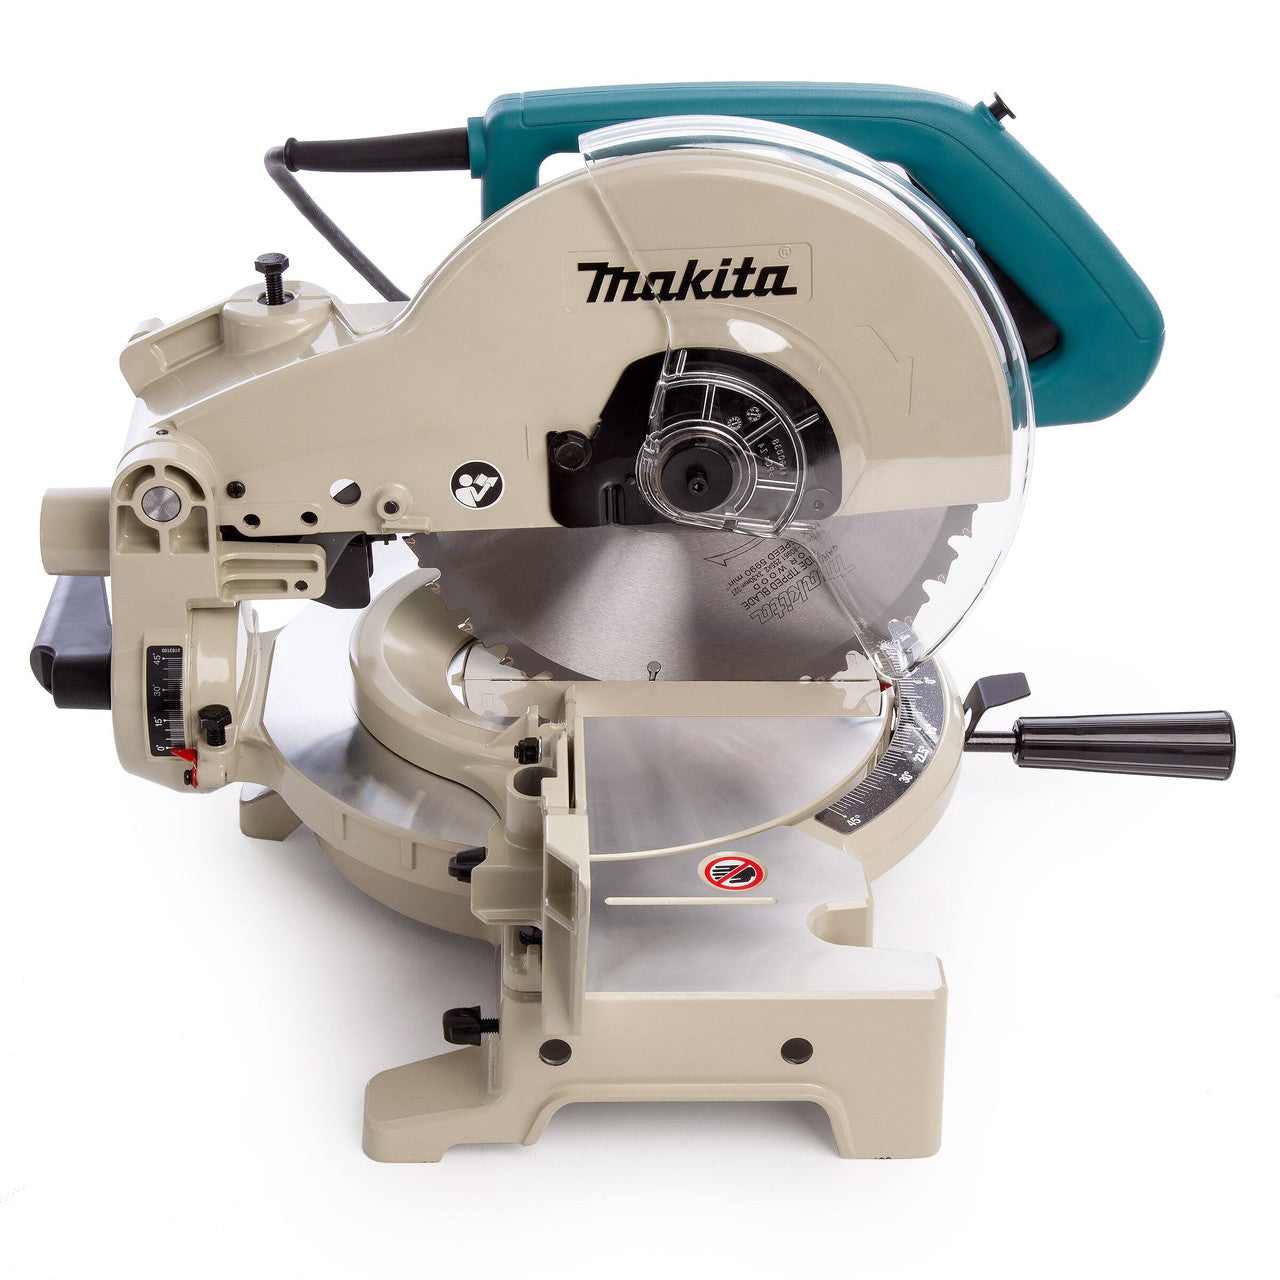 Makita LS1040N 260mm Mitre Saw (240V)